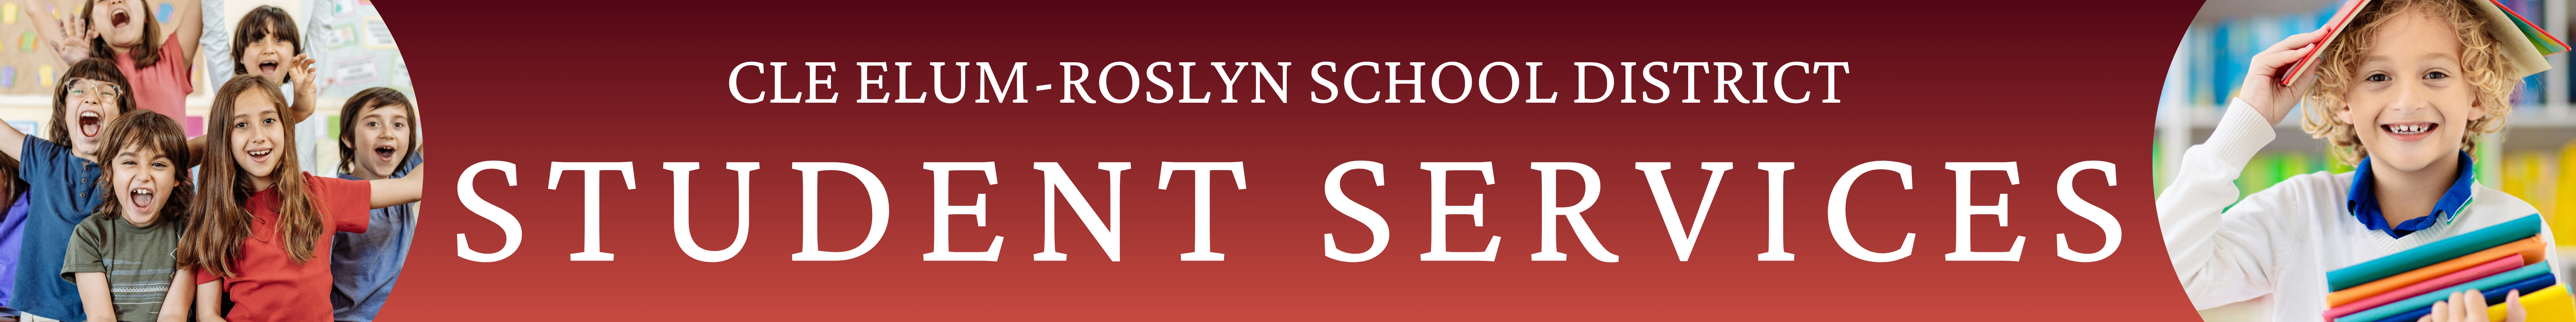 Cle Elum-Roslyn School District Student Services